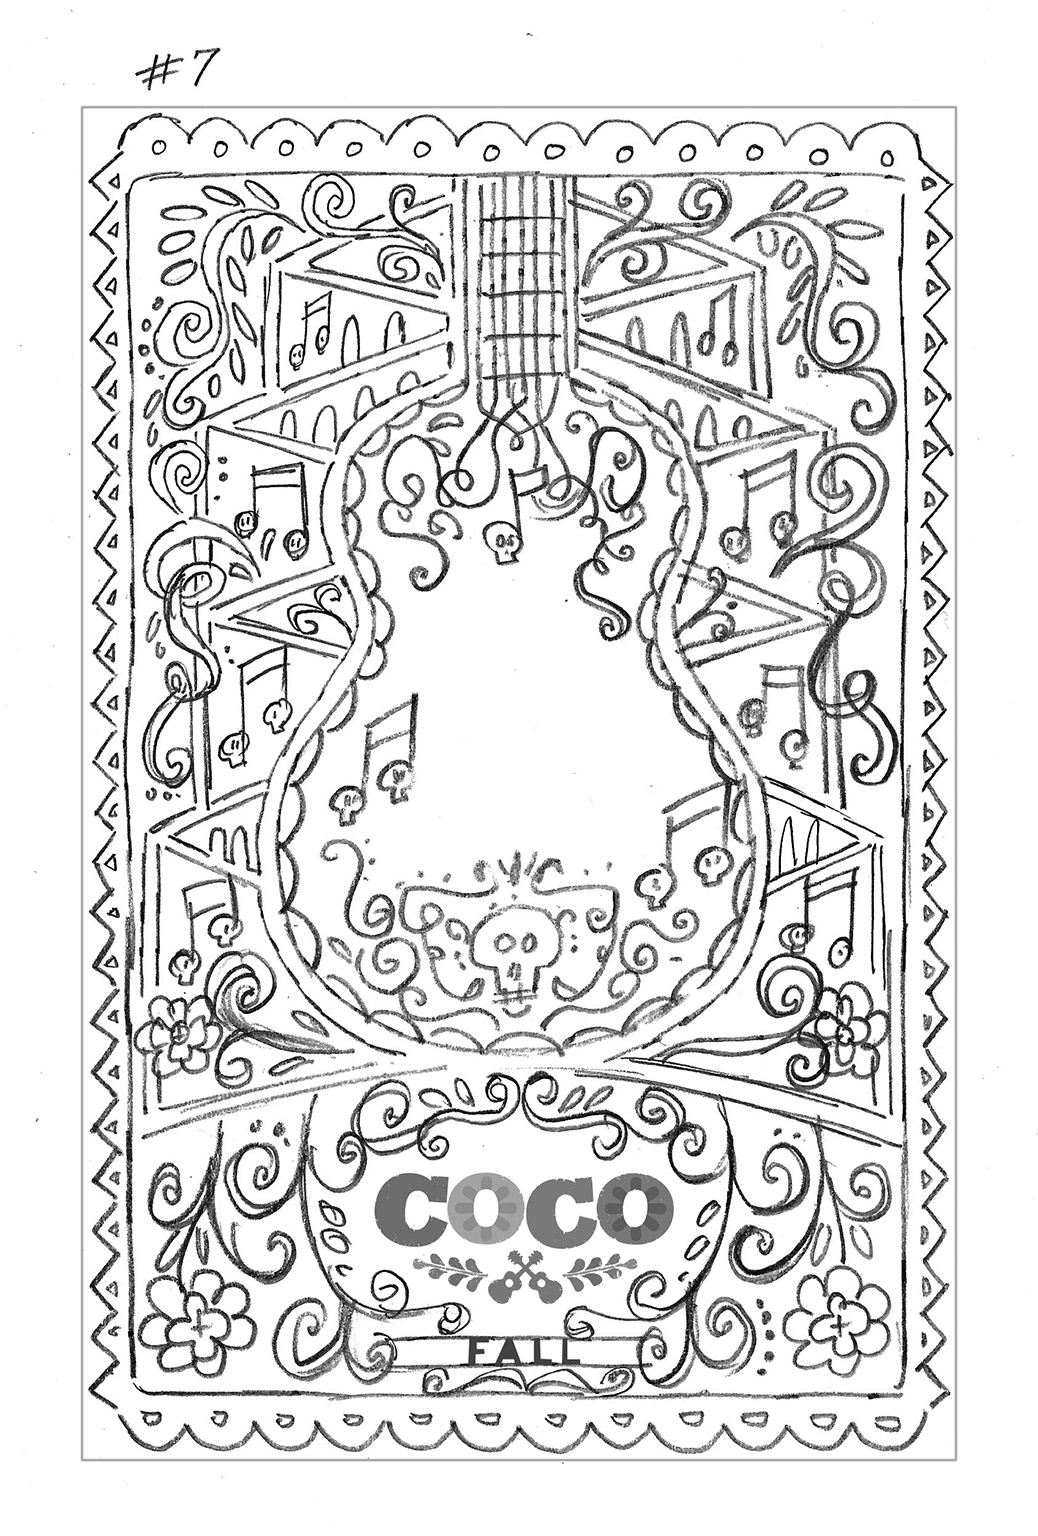 Coco papel picado illustrated Silhouette graphic folk art Mexican ornate guitar skull